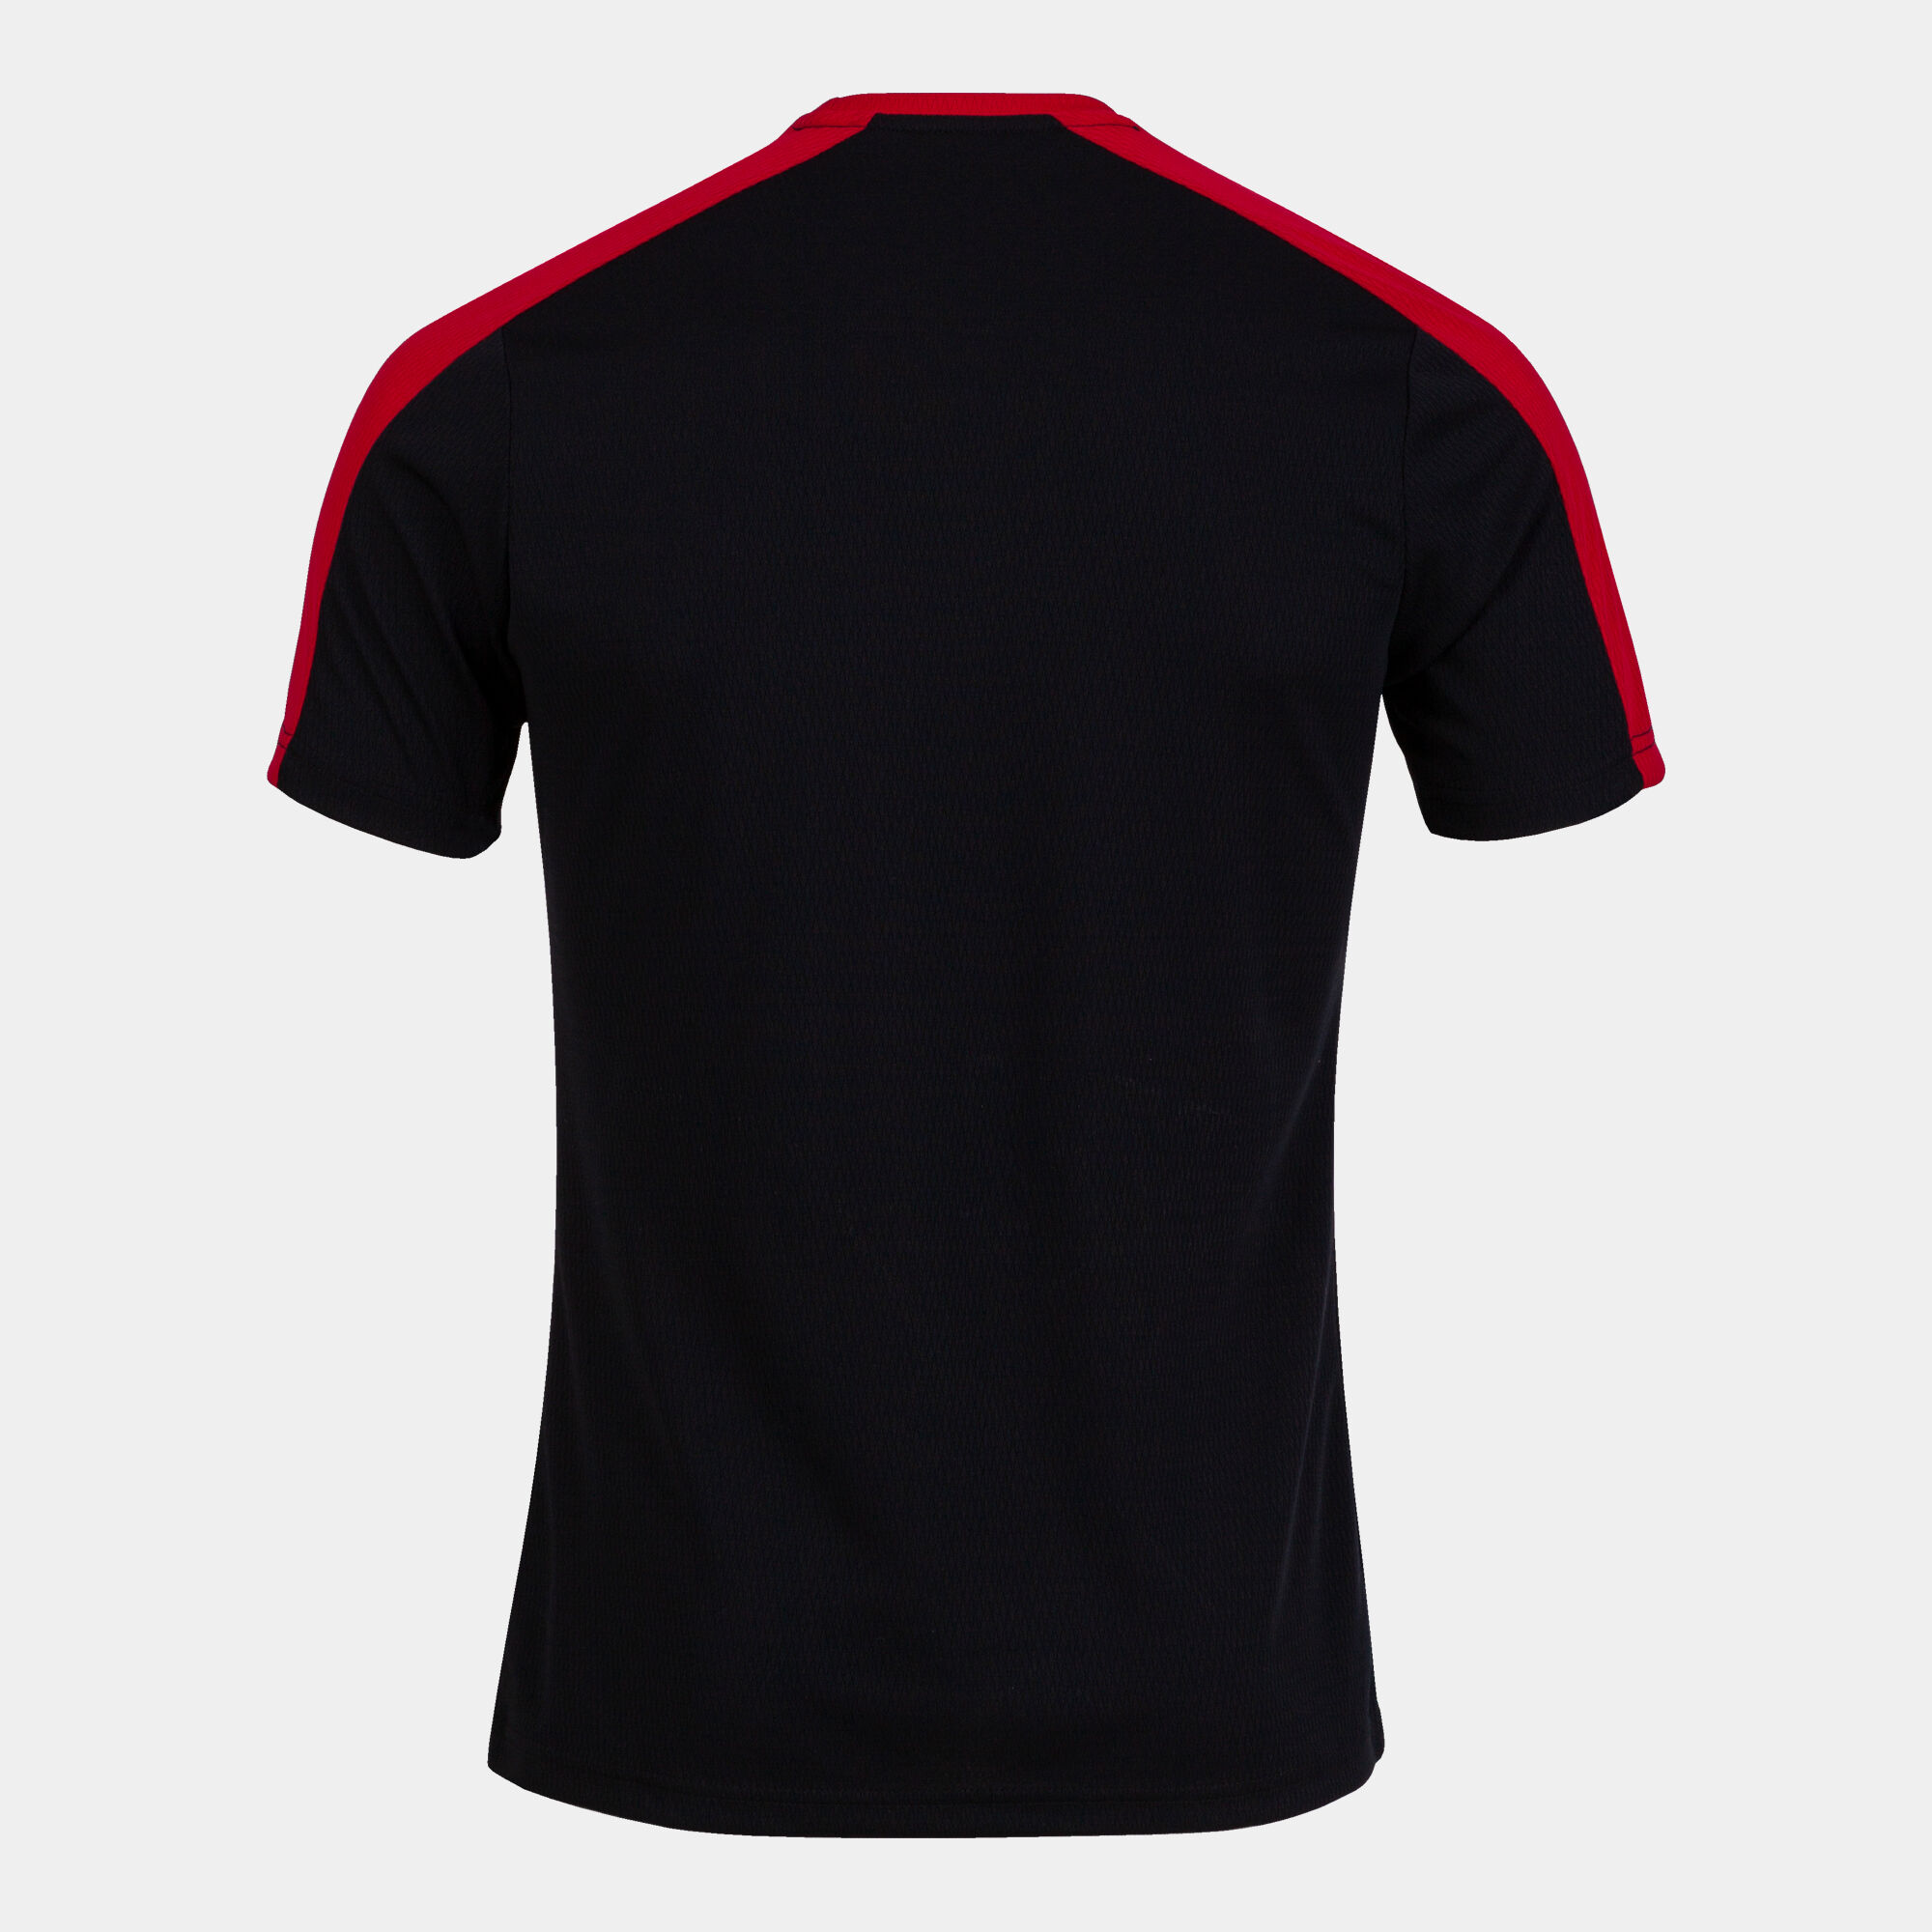 Shirt short sleeve man Eco Championship black red